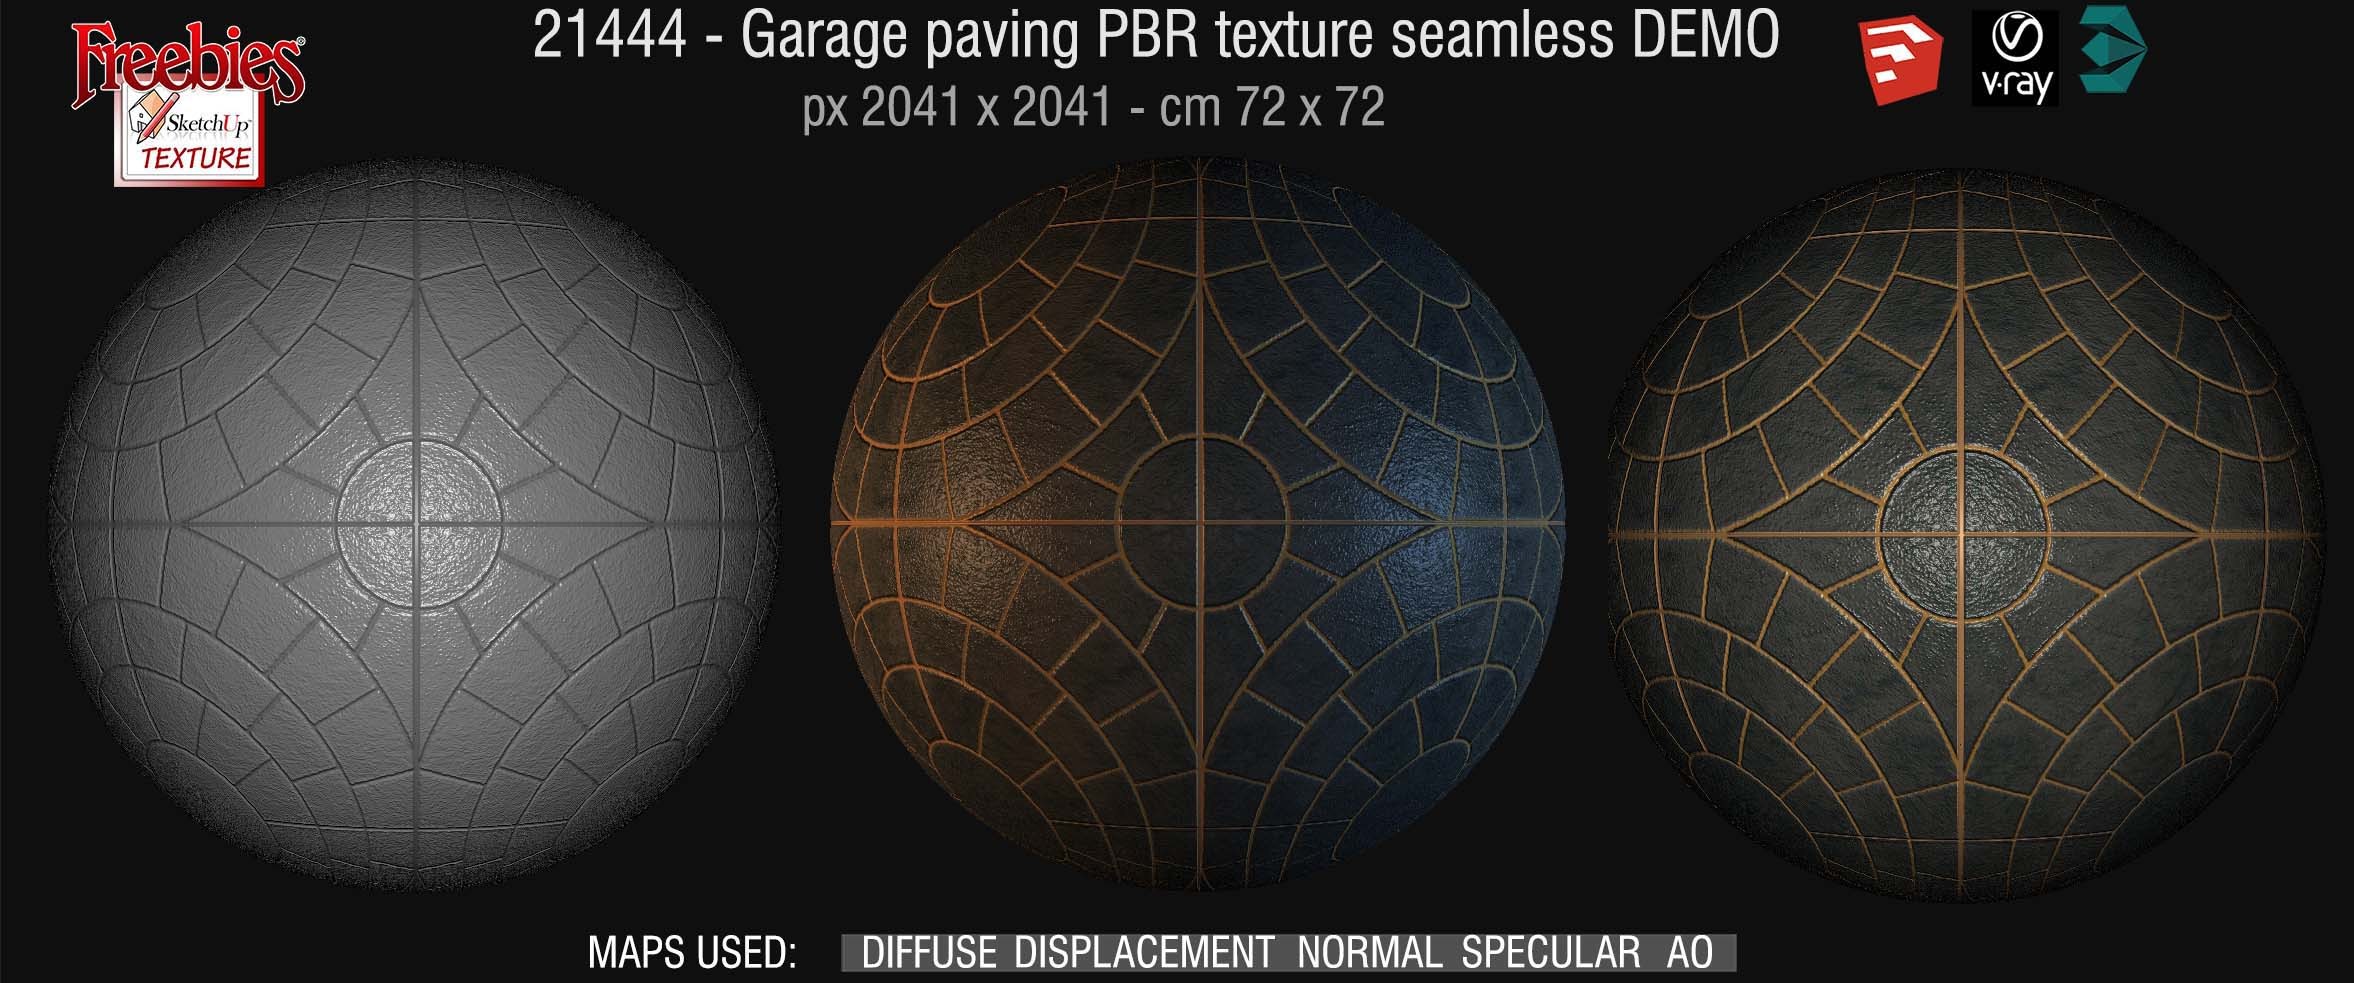 21444 garage paving PBR texture seamless